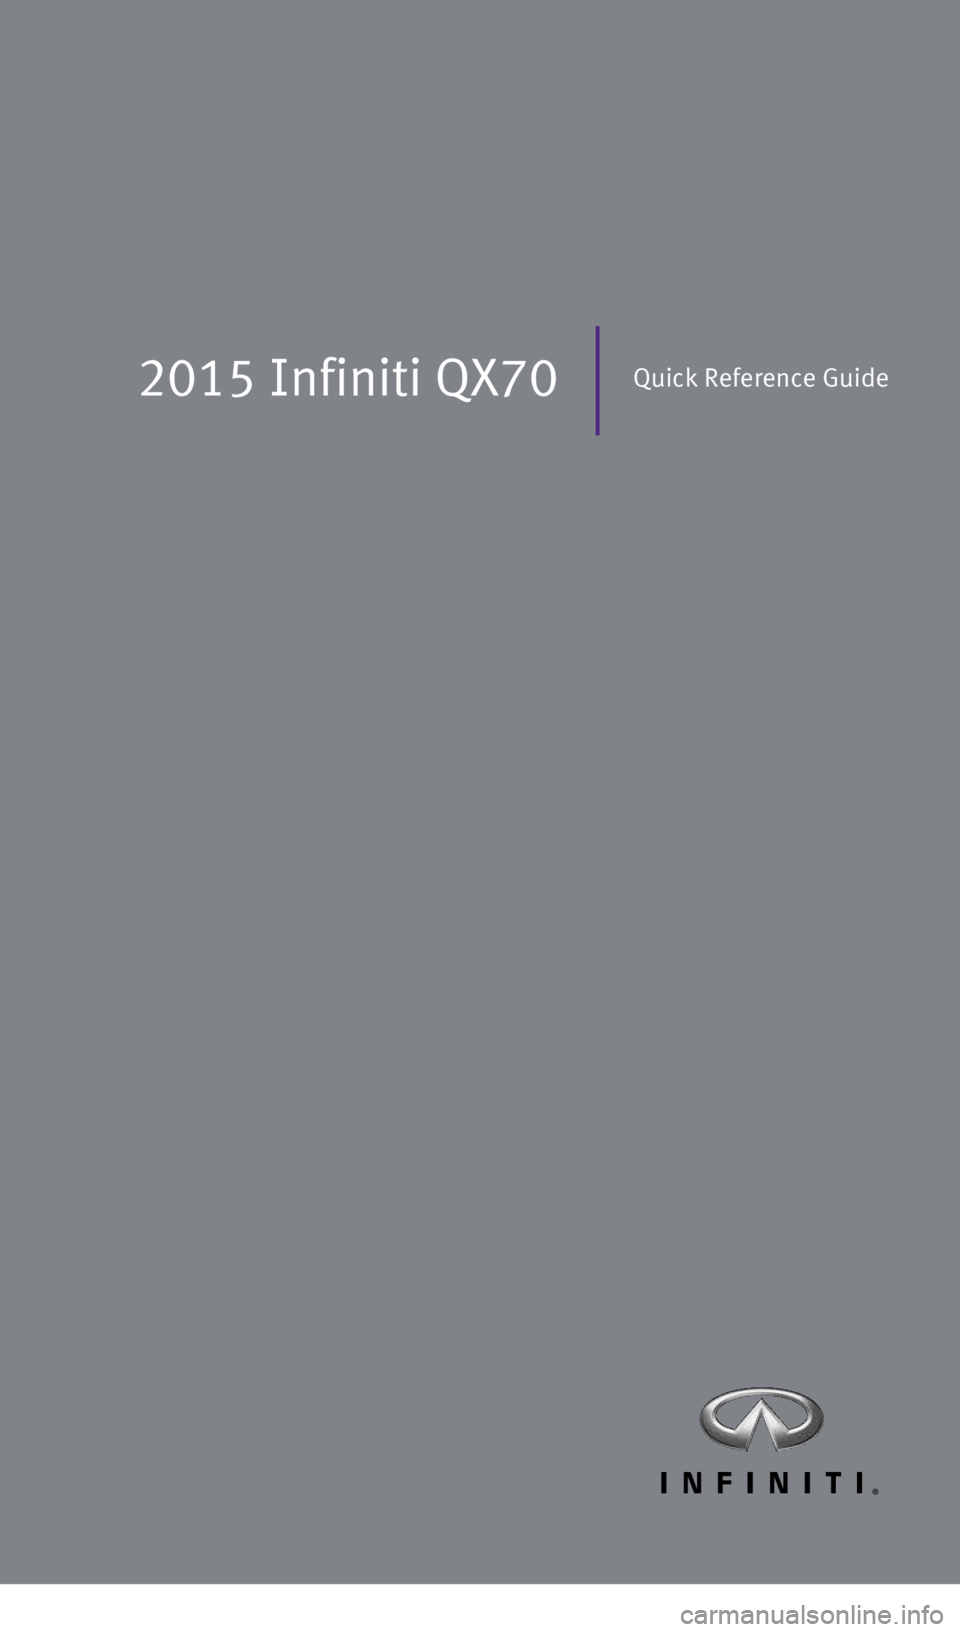 INFINITI QX70 2015  Quick Reference Guide 2015 Infiniti QX70Quick Reference Guide
1807402_15b_Infiniti_QX70_QRG_100114.indd   310/1/14   4:17 PM 